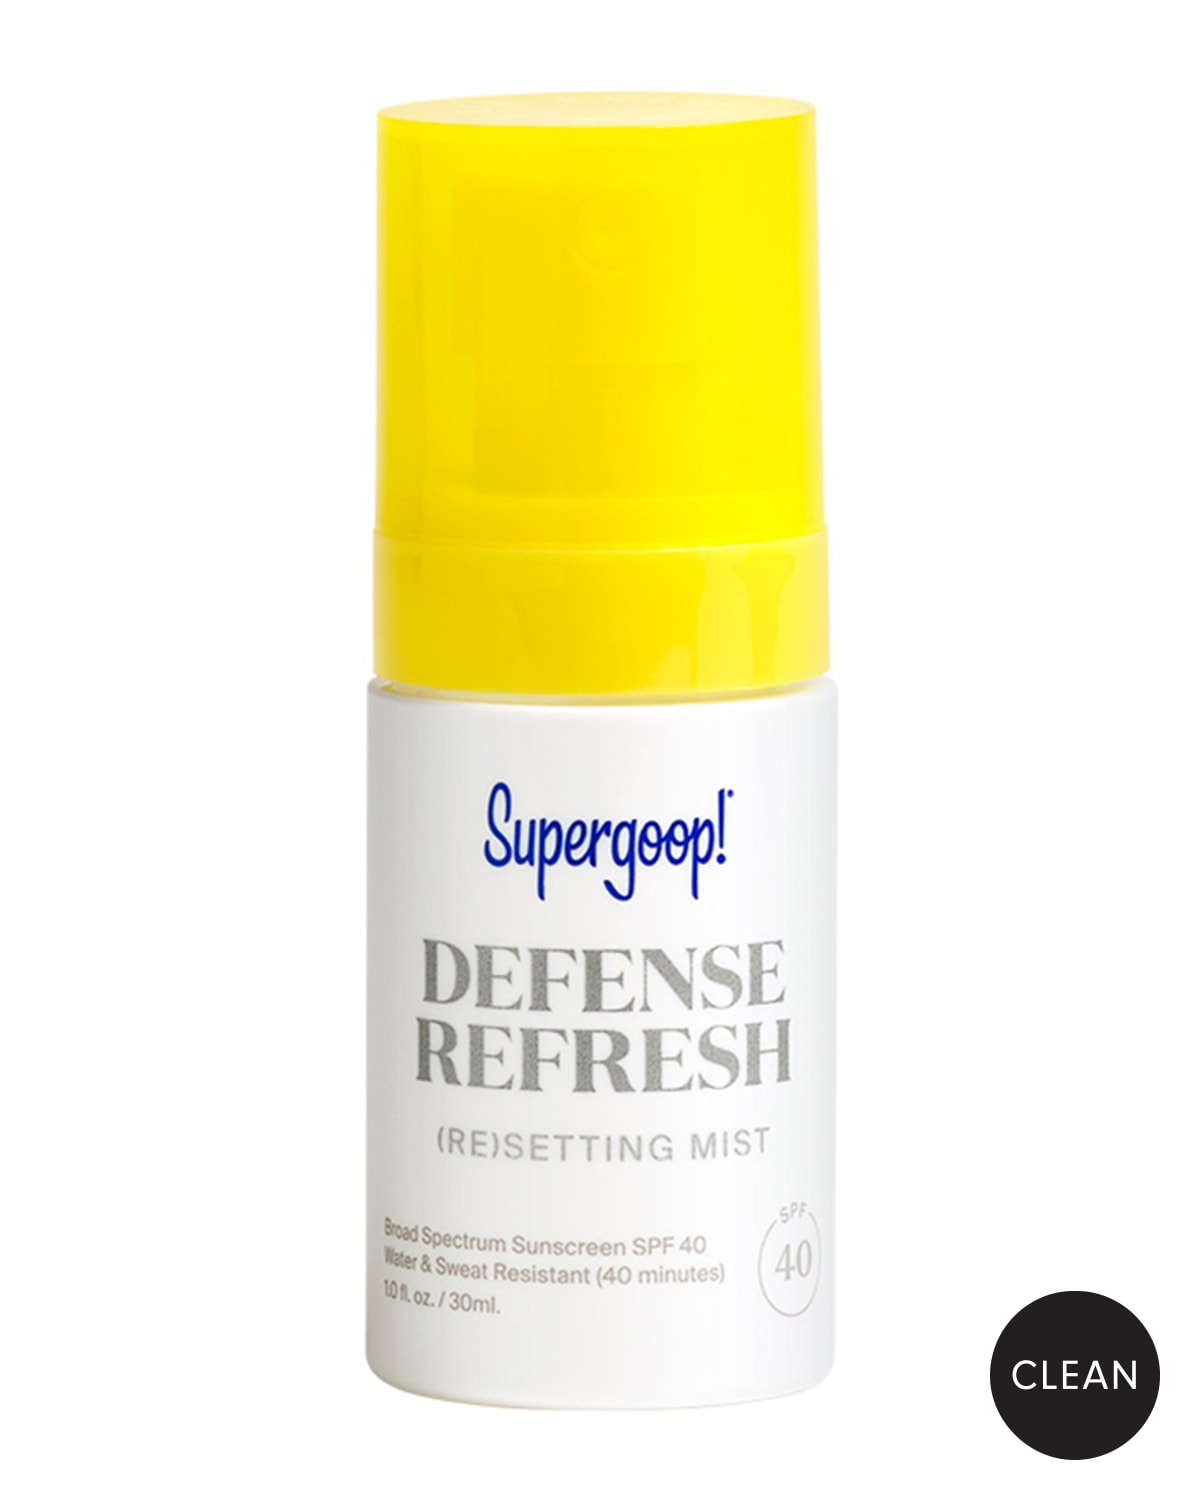 Defense Refresh (Re)setting Mist SPF 40, 1 oz./ 30 mL